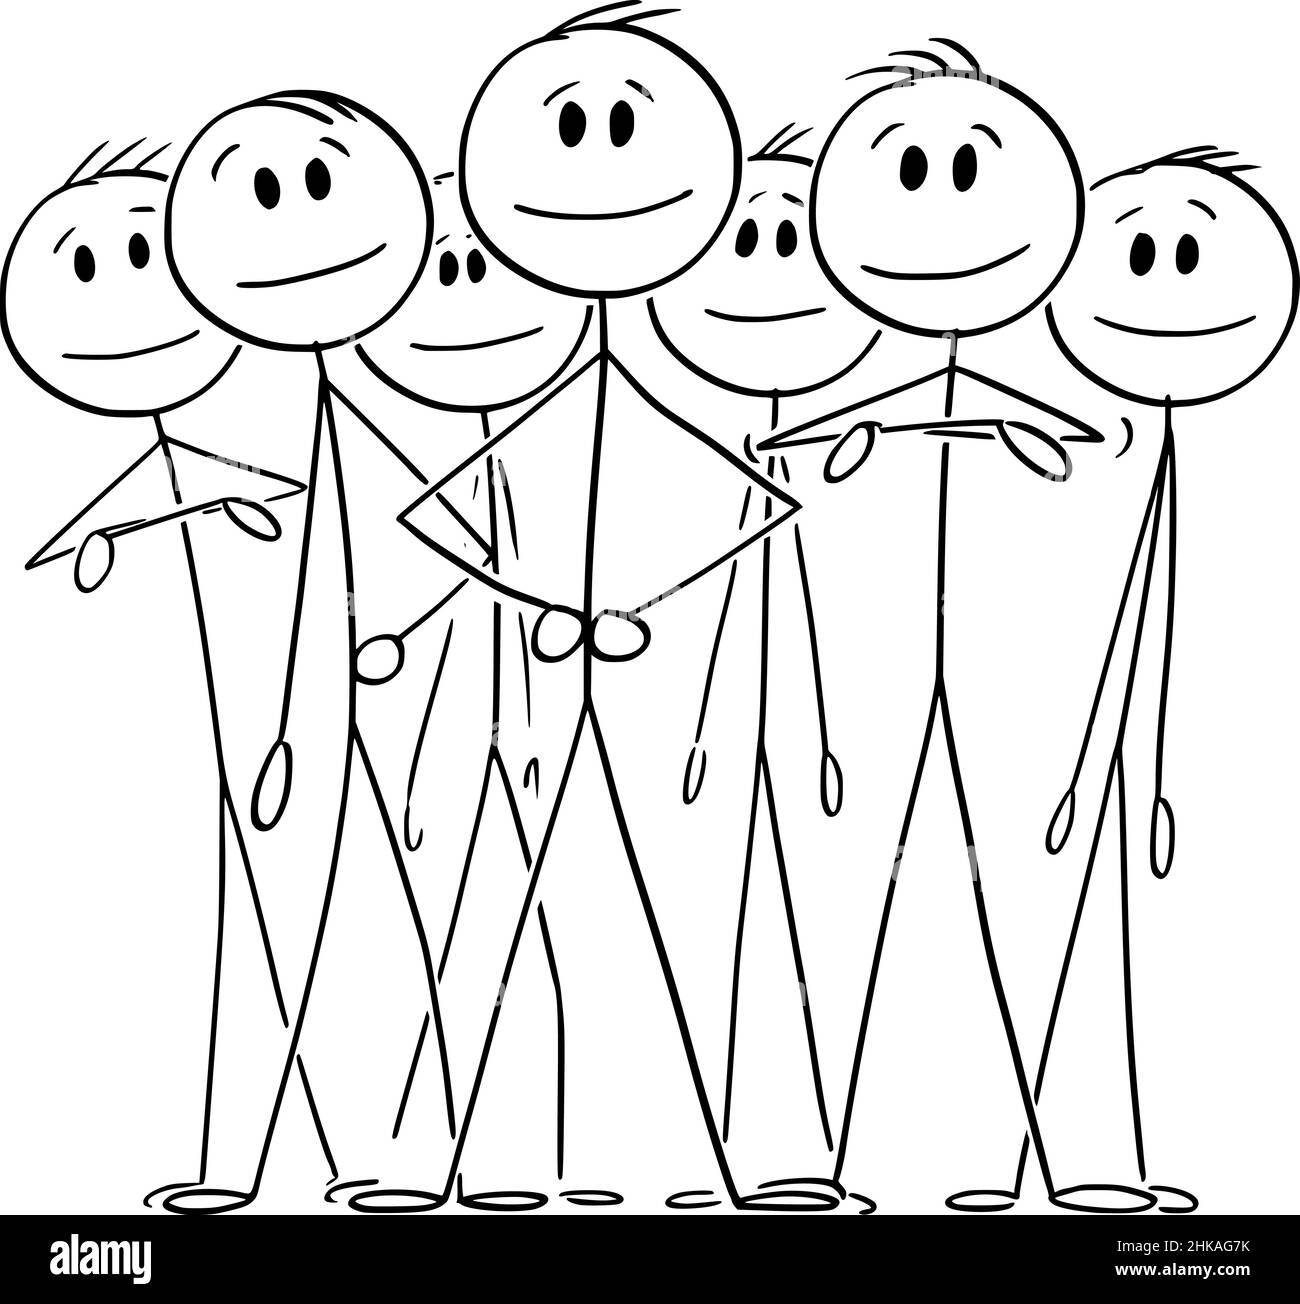 Big Smiling Business Team With Leader Vector Cartoon Stick Figure Illustration Stock Vector 4944